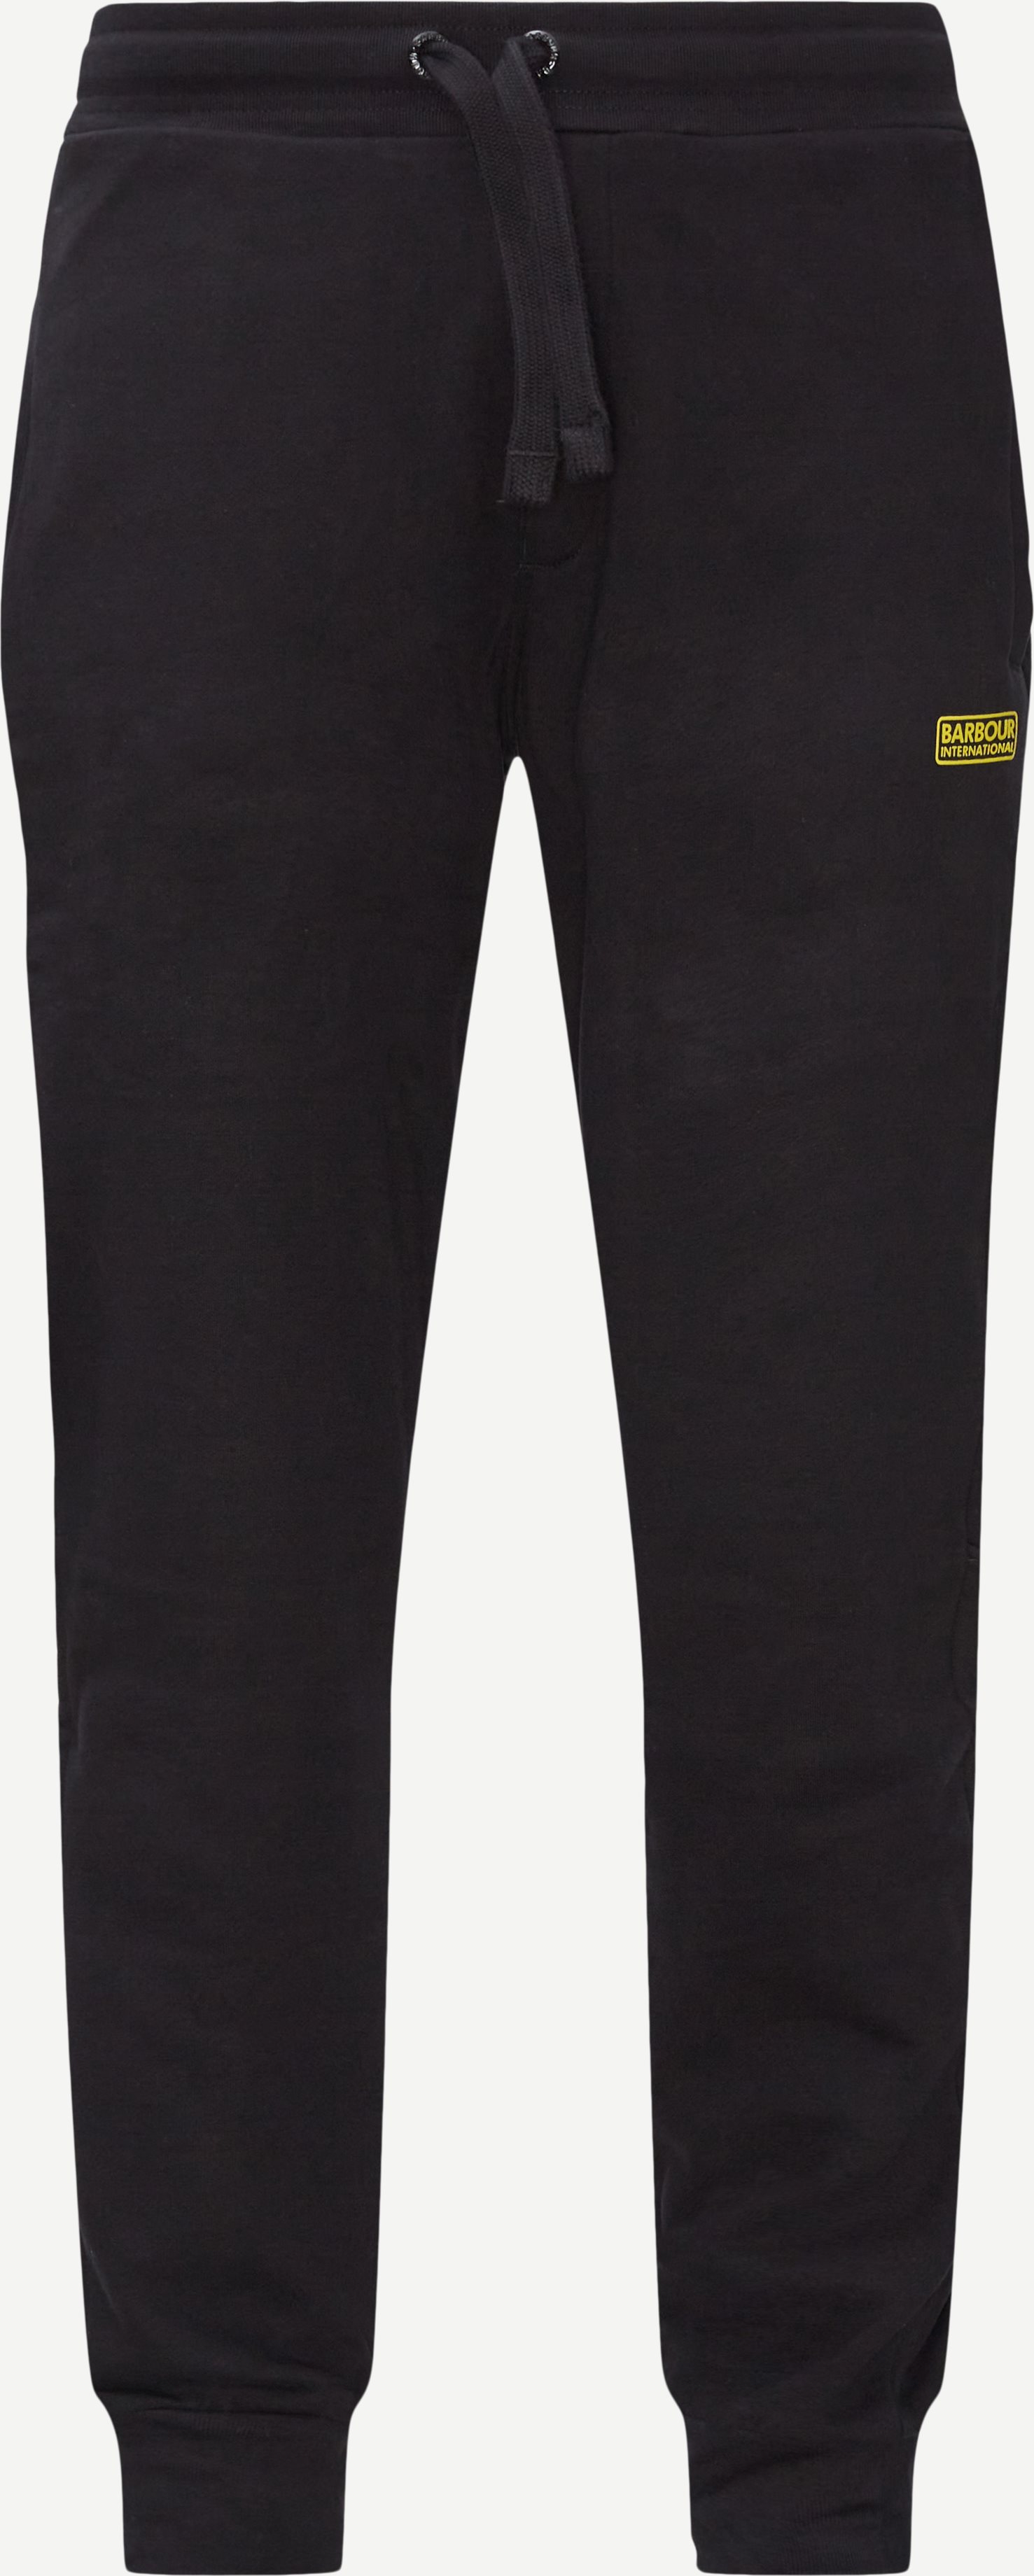 Sport Track Pants - Trousers - Regular fit - Black